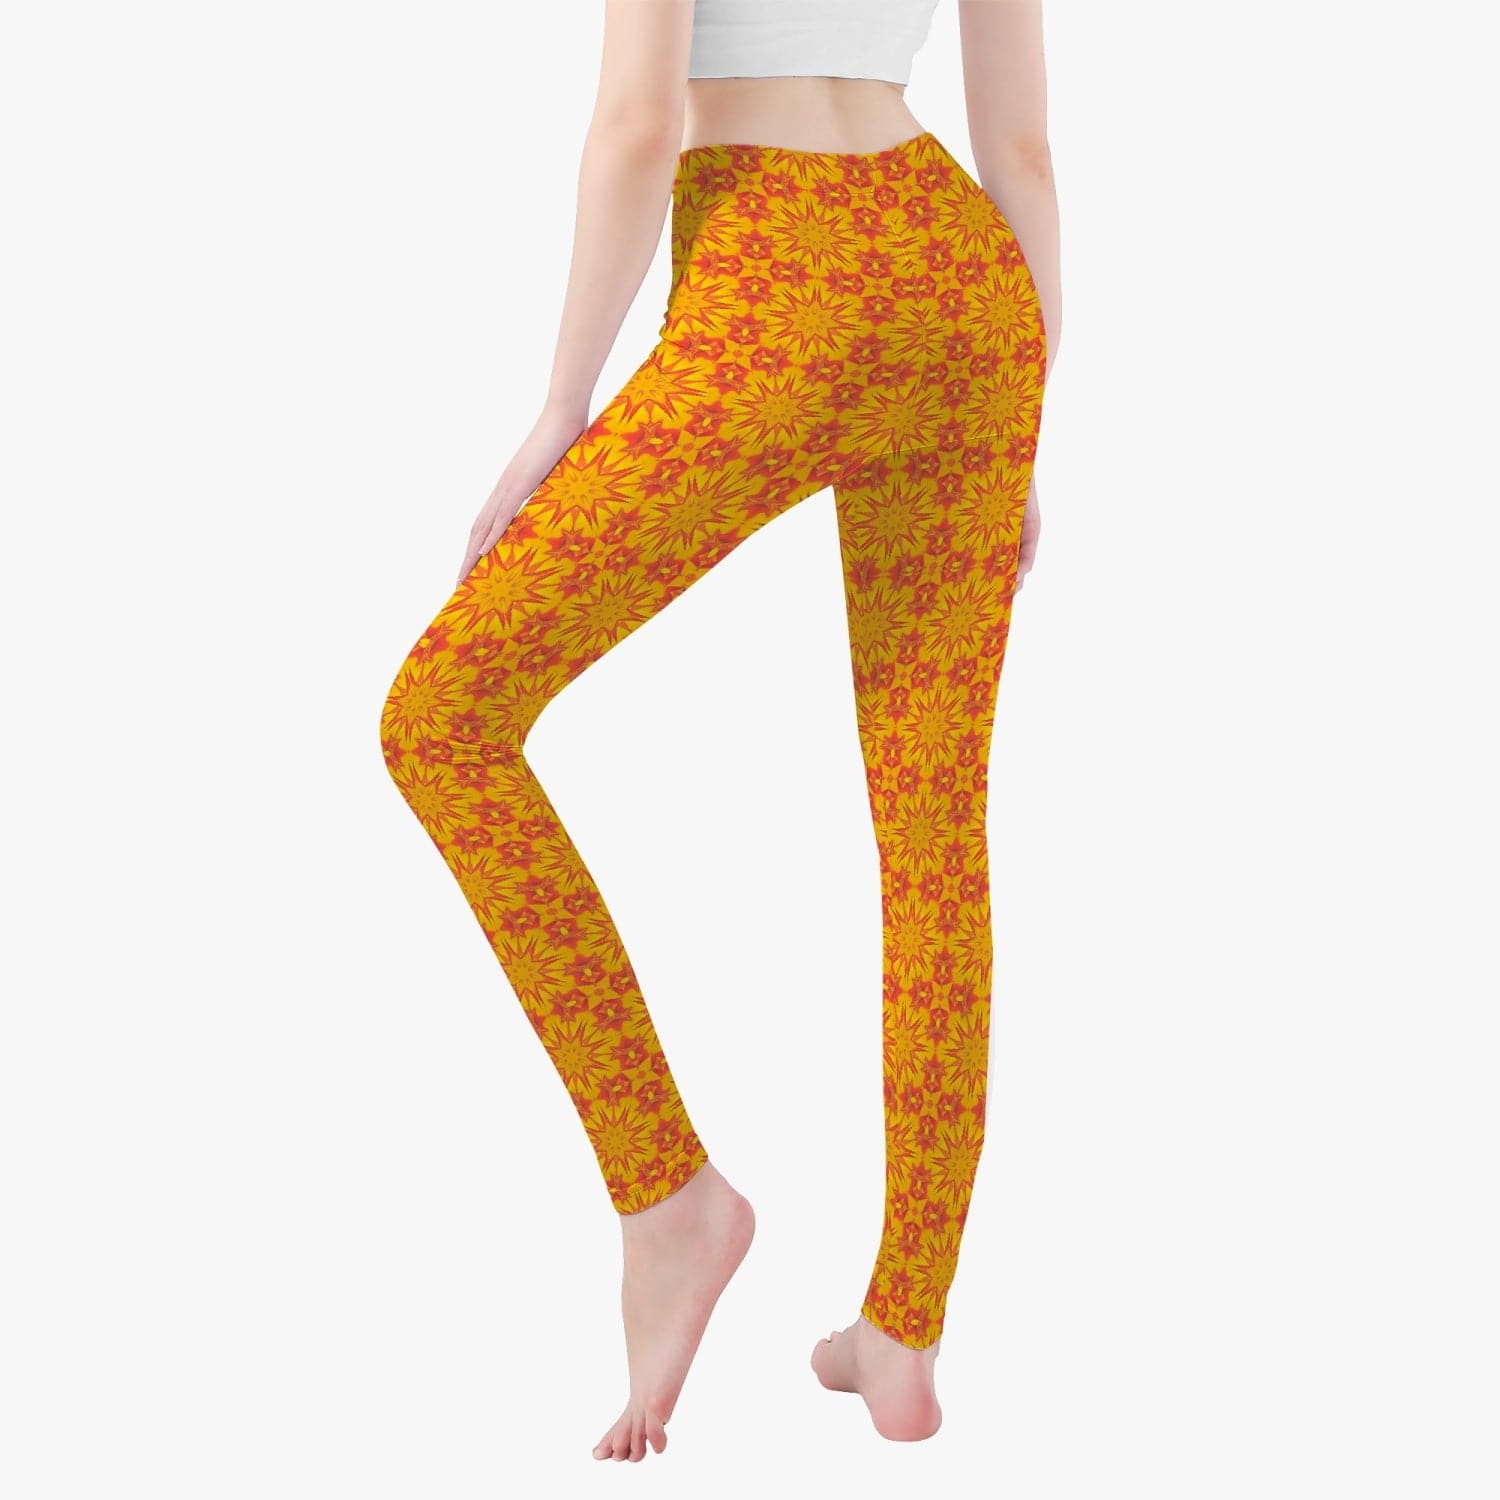 Solar Plexus Yoga Pants, by Sensus Studio Design